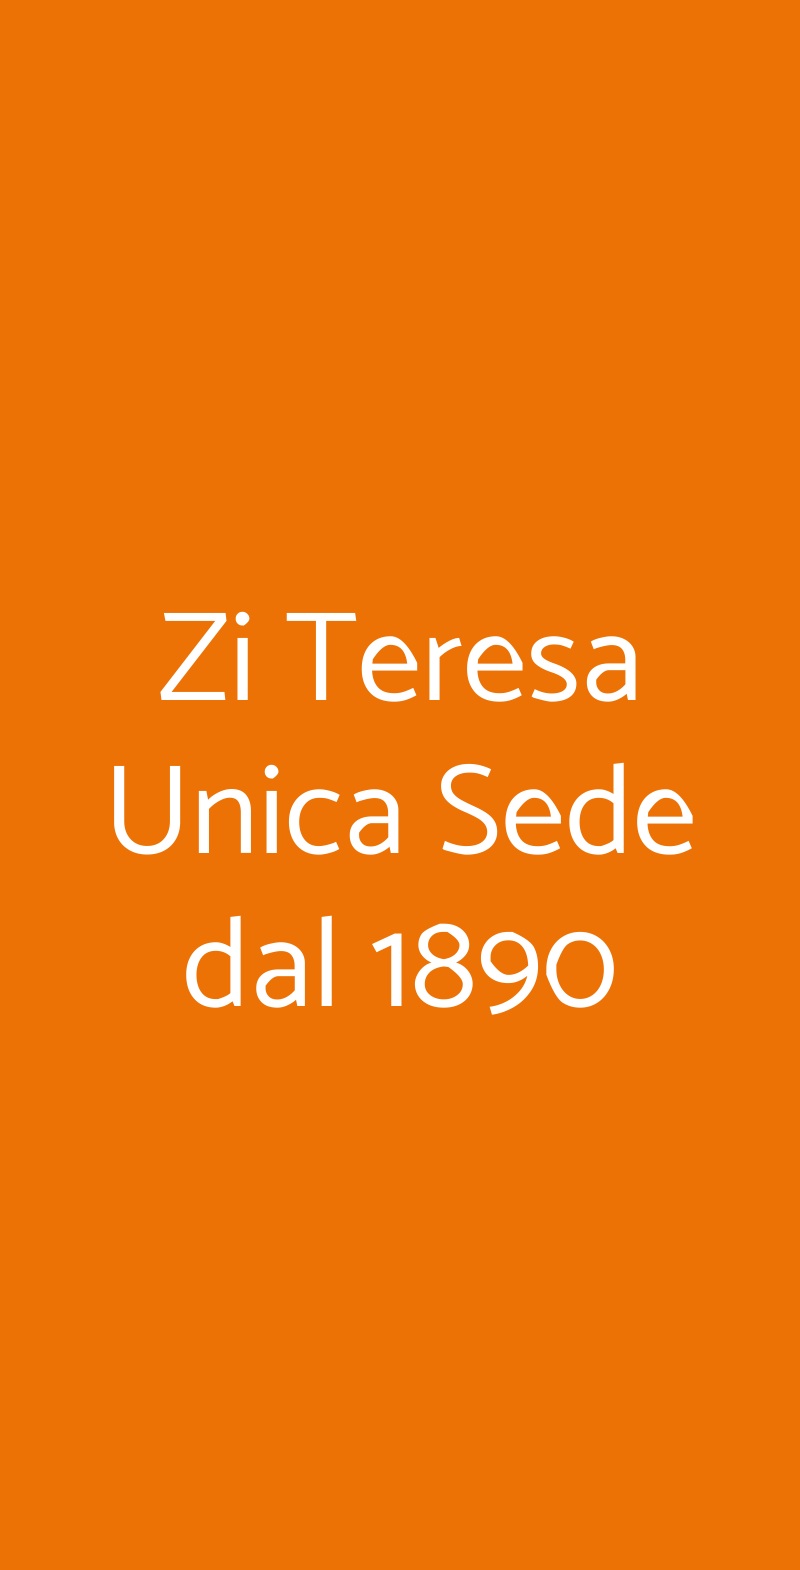 Zi Teresa Unica Sede dal 1890 Napoli menù 1 pagina